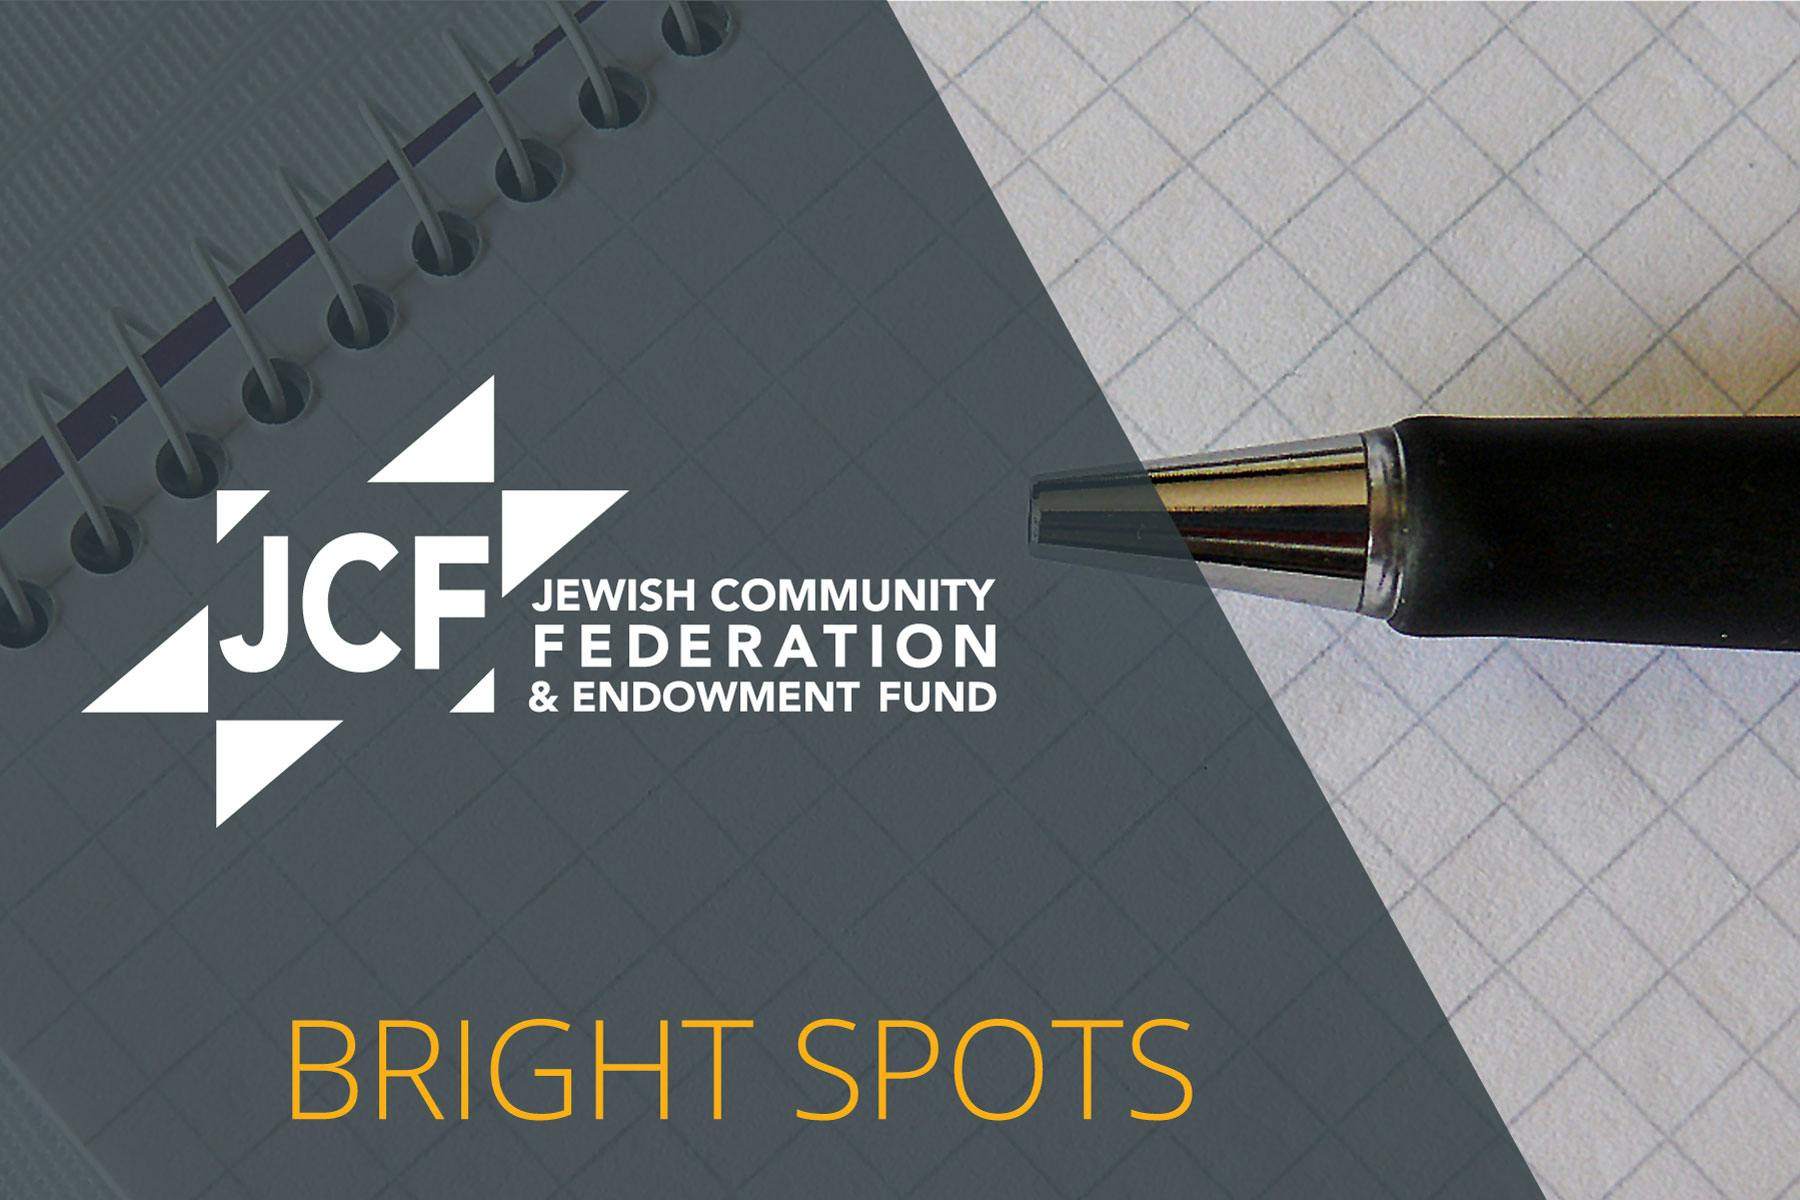 Bright Spots: Jewish Community Federation & Endowment Fund